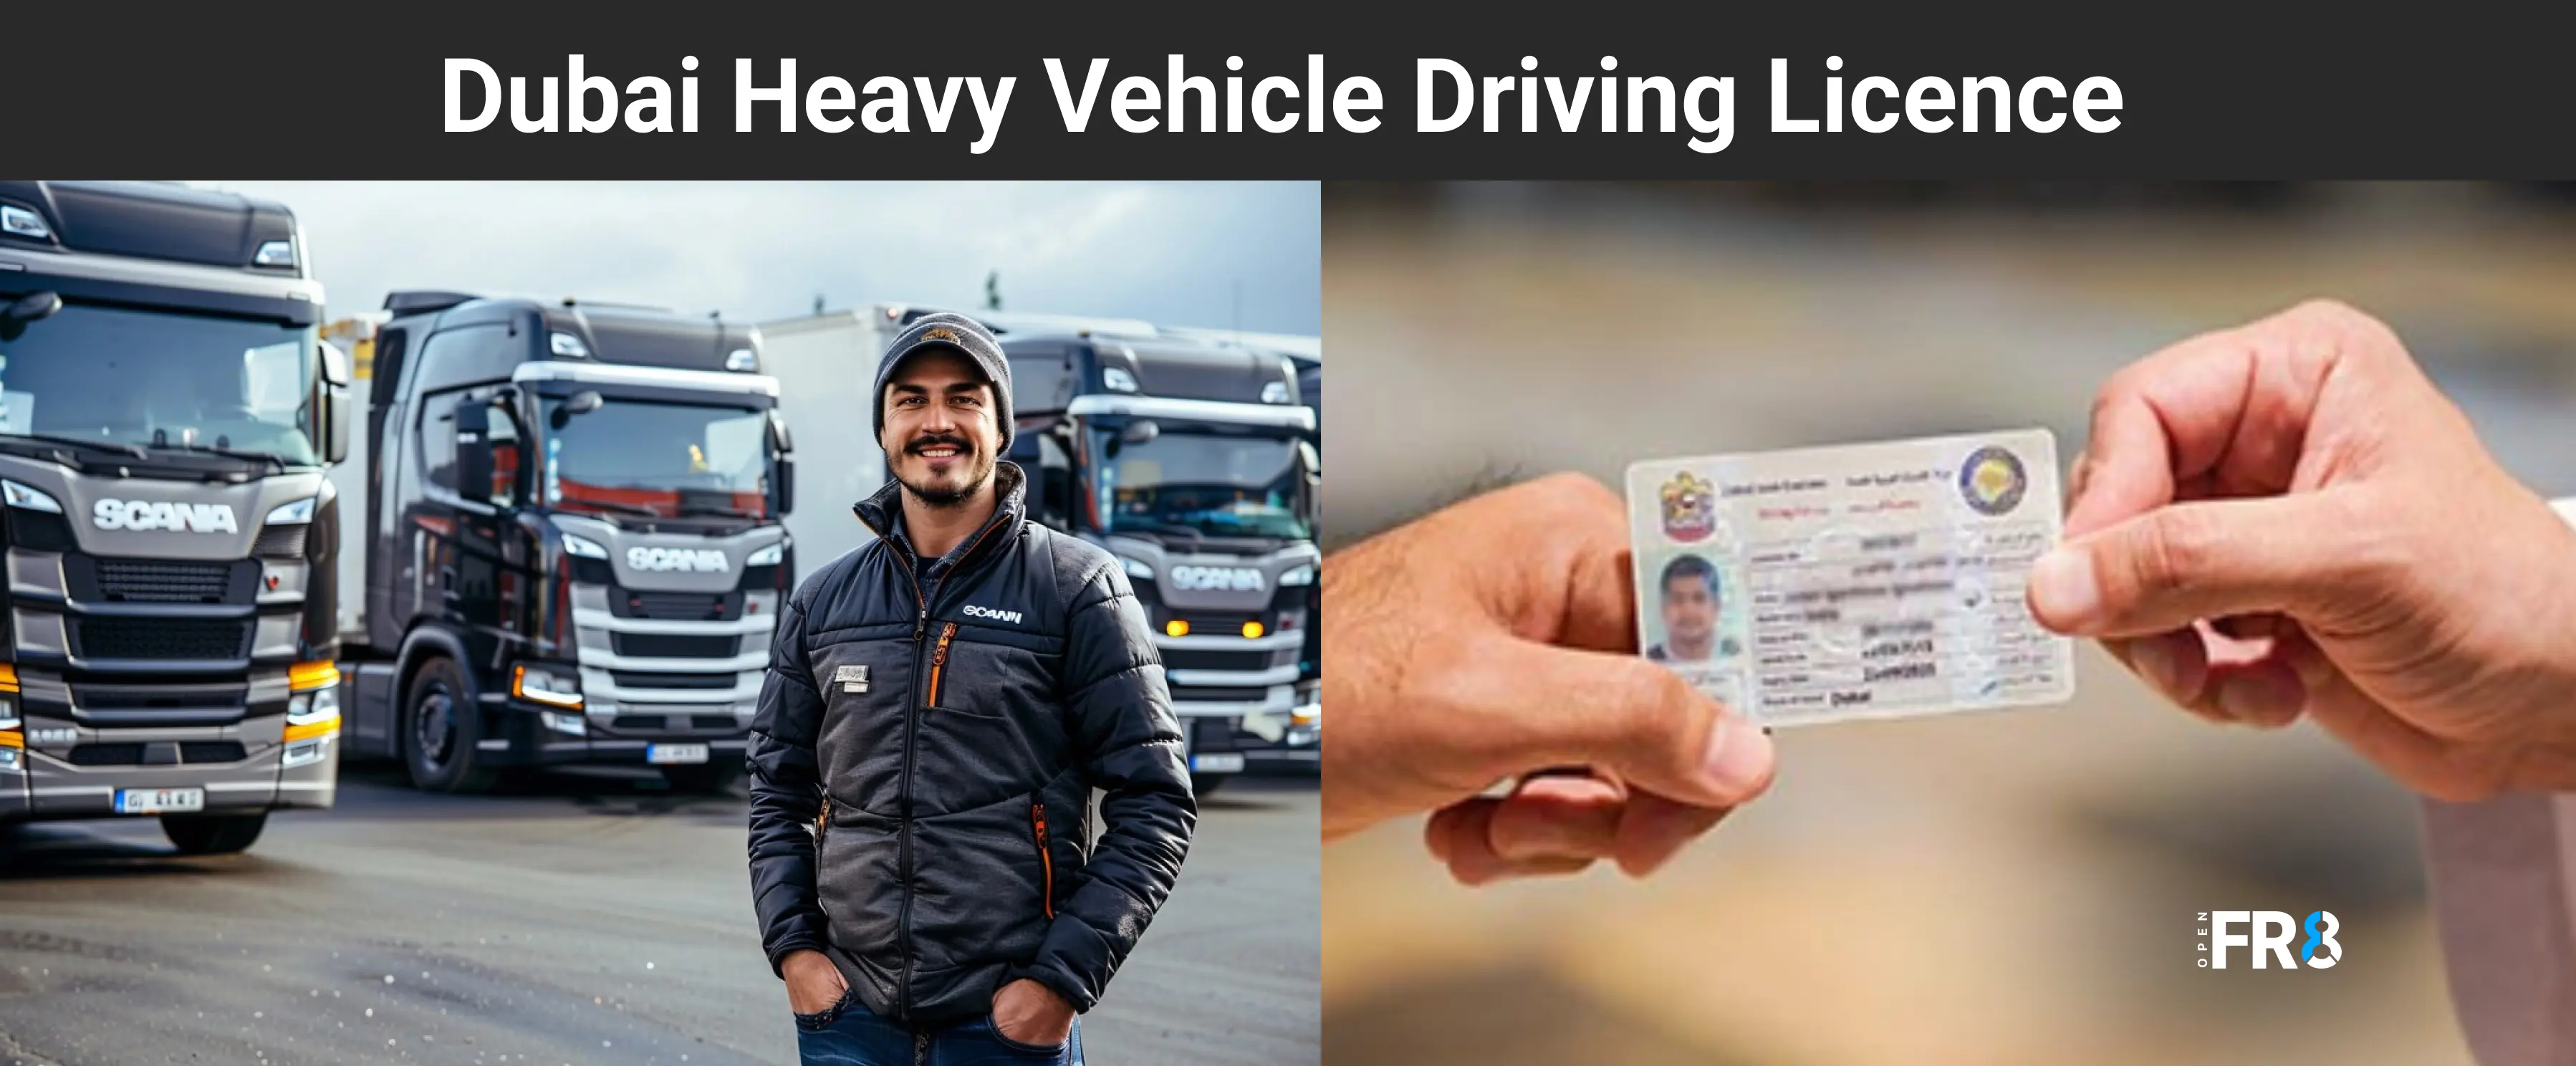 How to Obtain a Heavy Vehicle Dubai Driving License